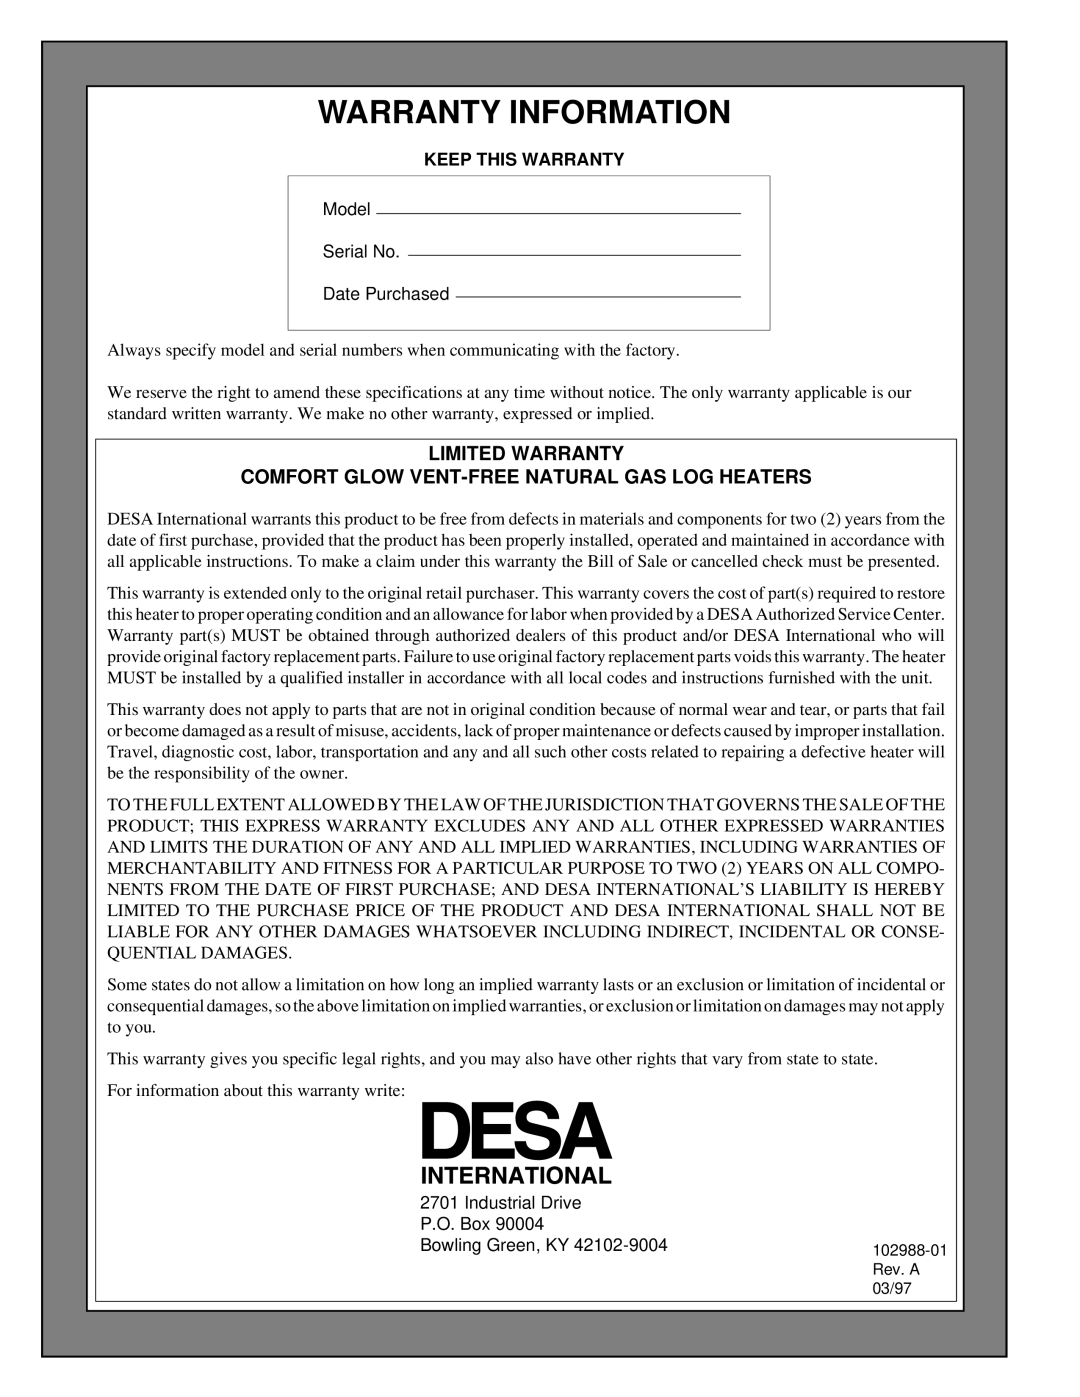 Desa CGS2718N Warranty Information, Limited Warranty, Comfort Glow Vent-Freenatural Gas Log Heaters, Keep This Warranty 